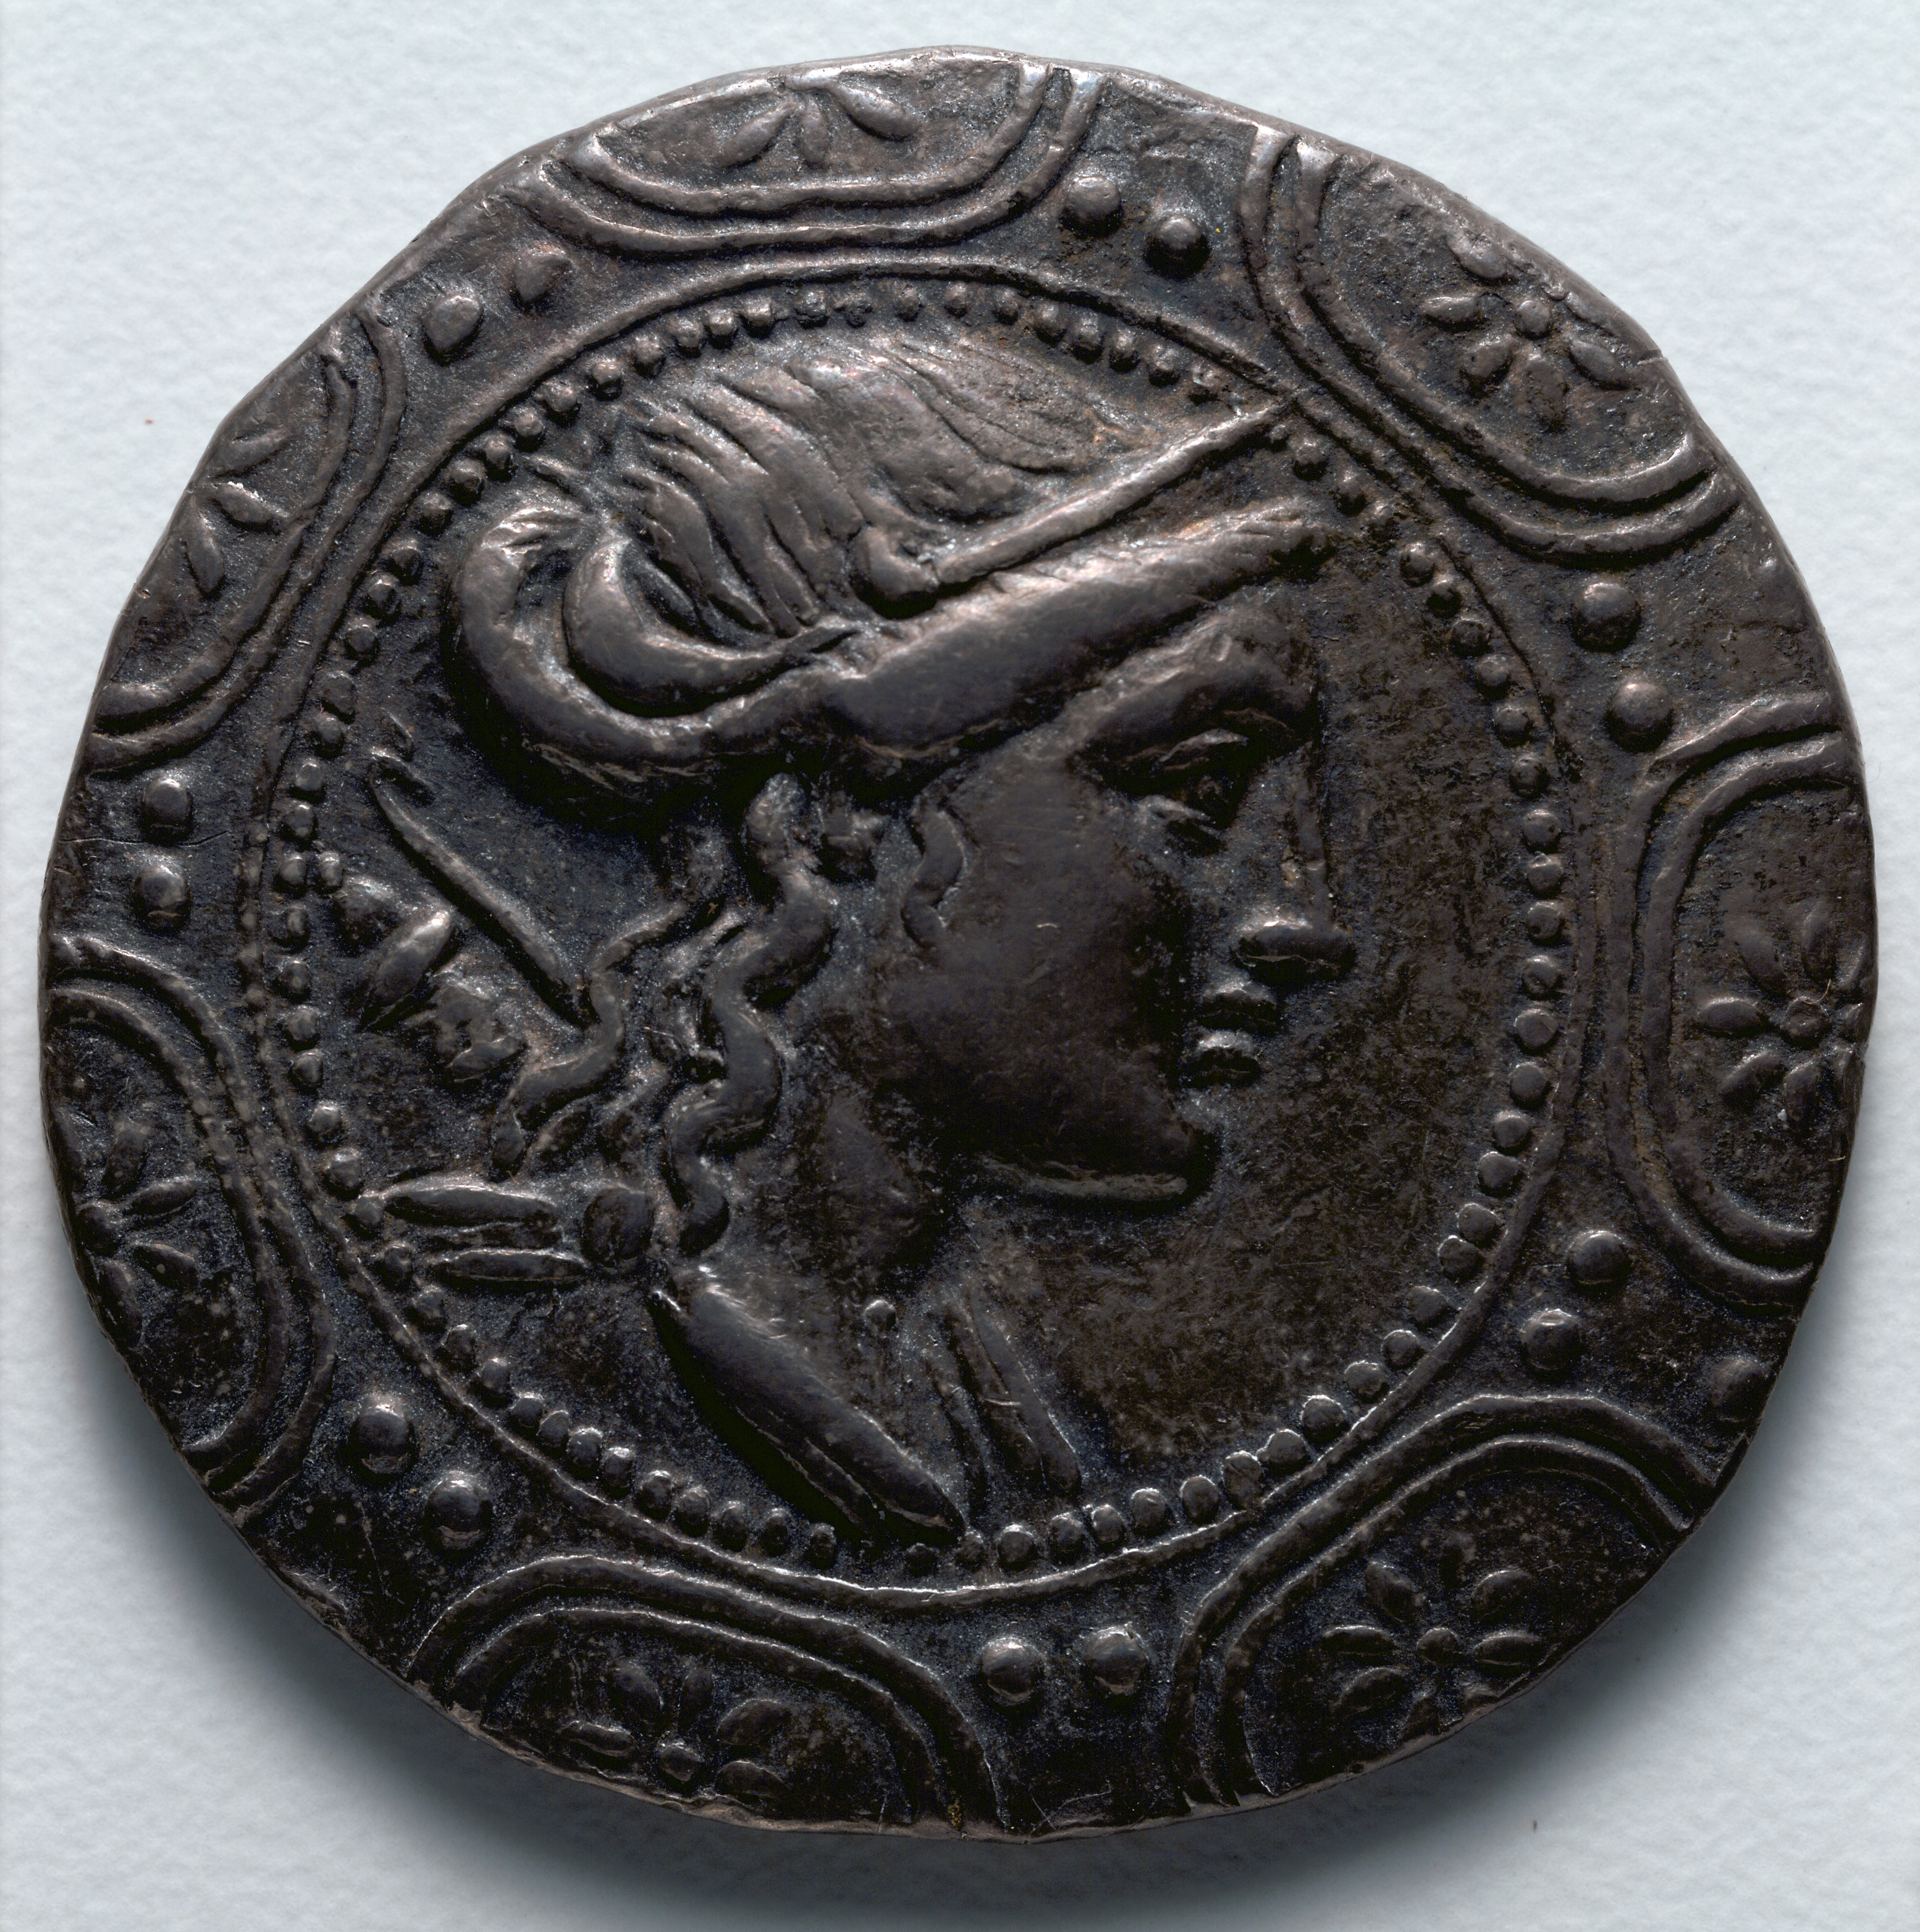 Tetradrachm: Macedonian Shield with Head of Artemis (obverse)